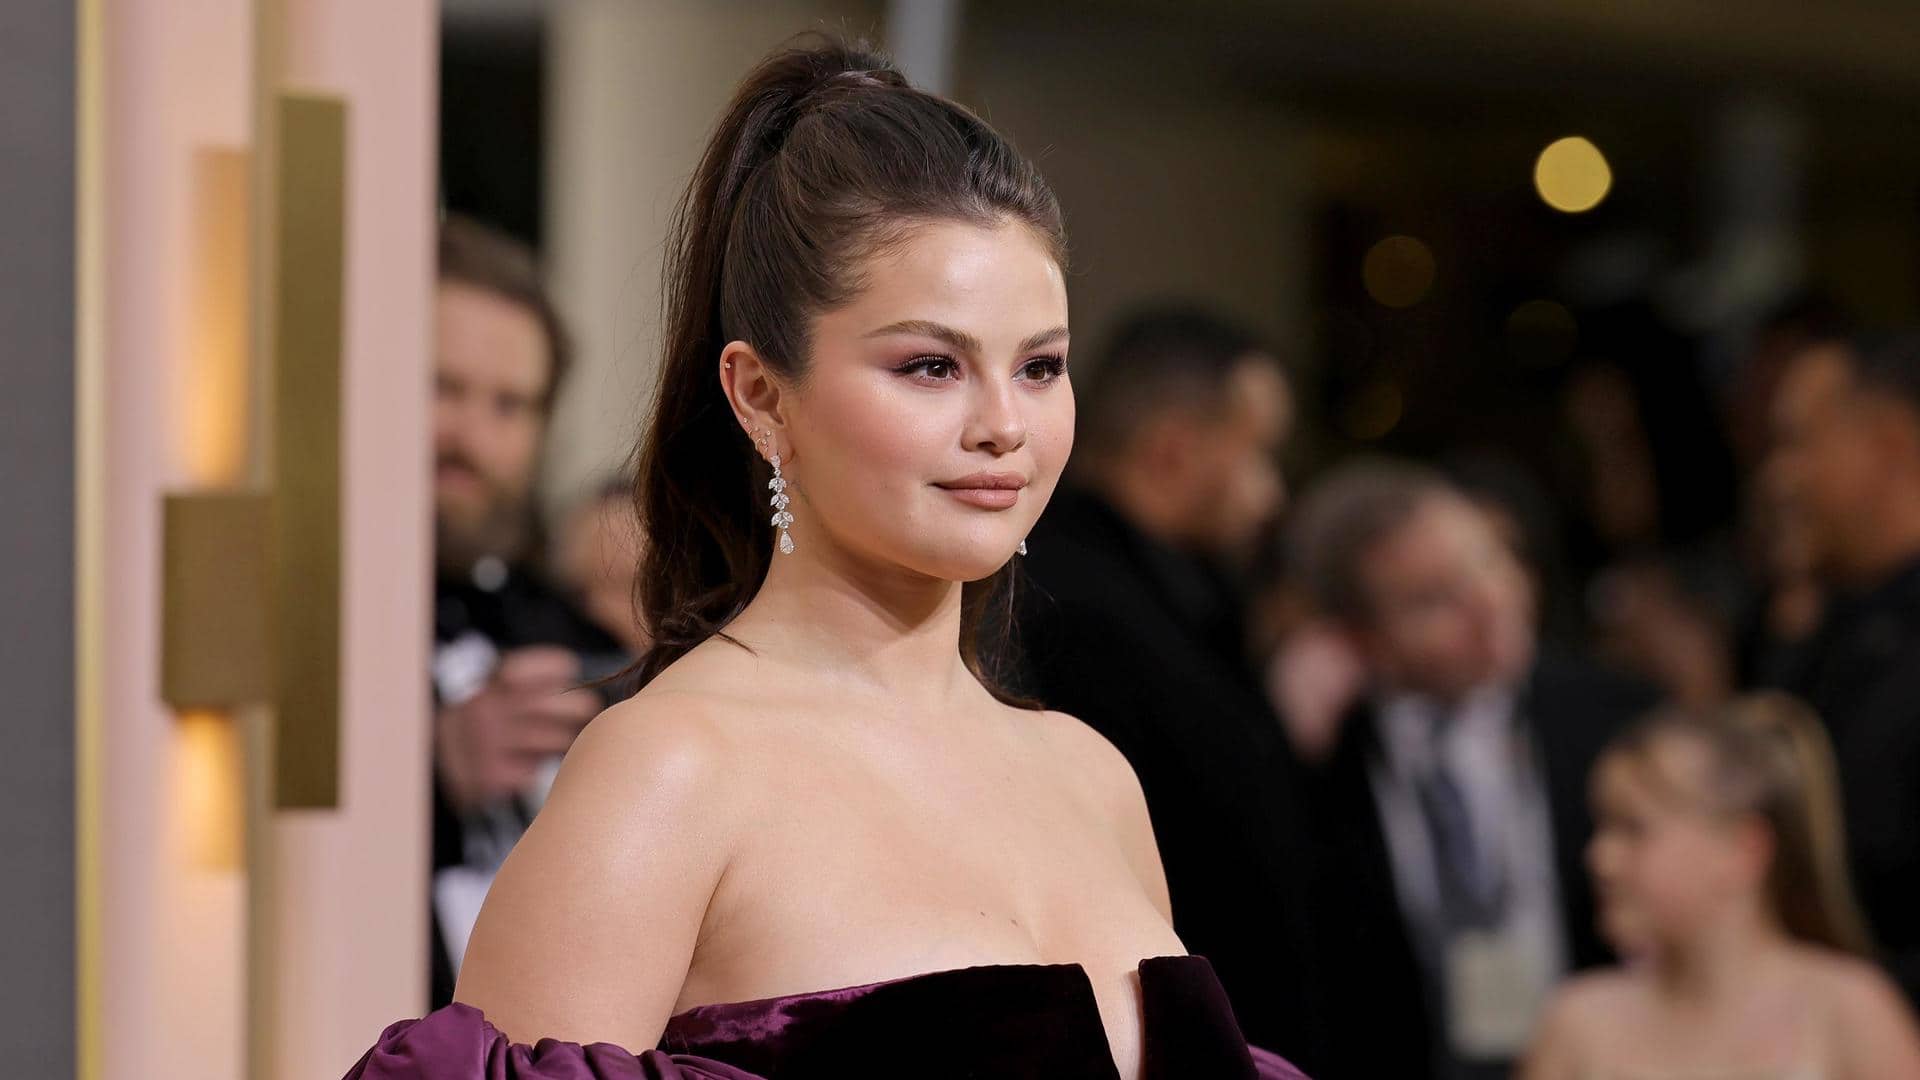 Selena Gomez teases new music, shares photos from Paris